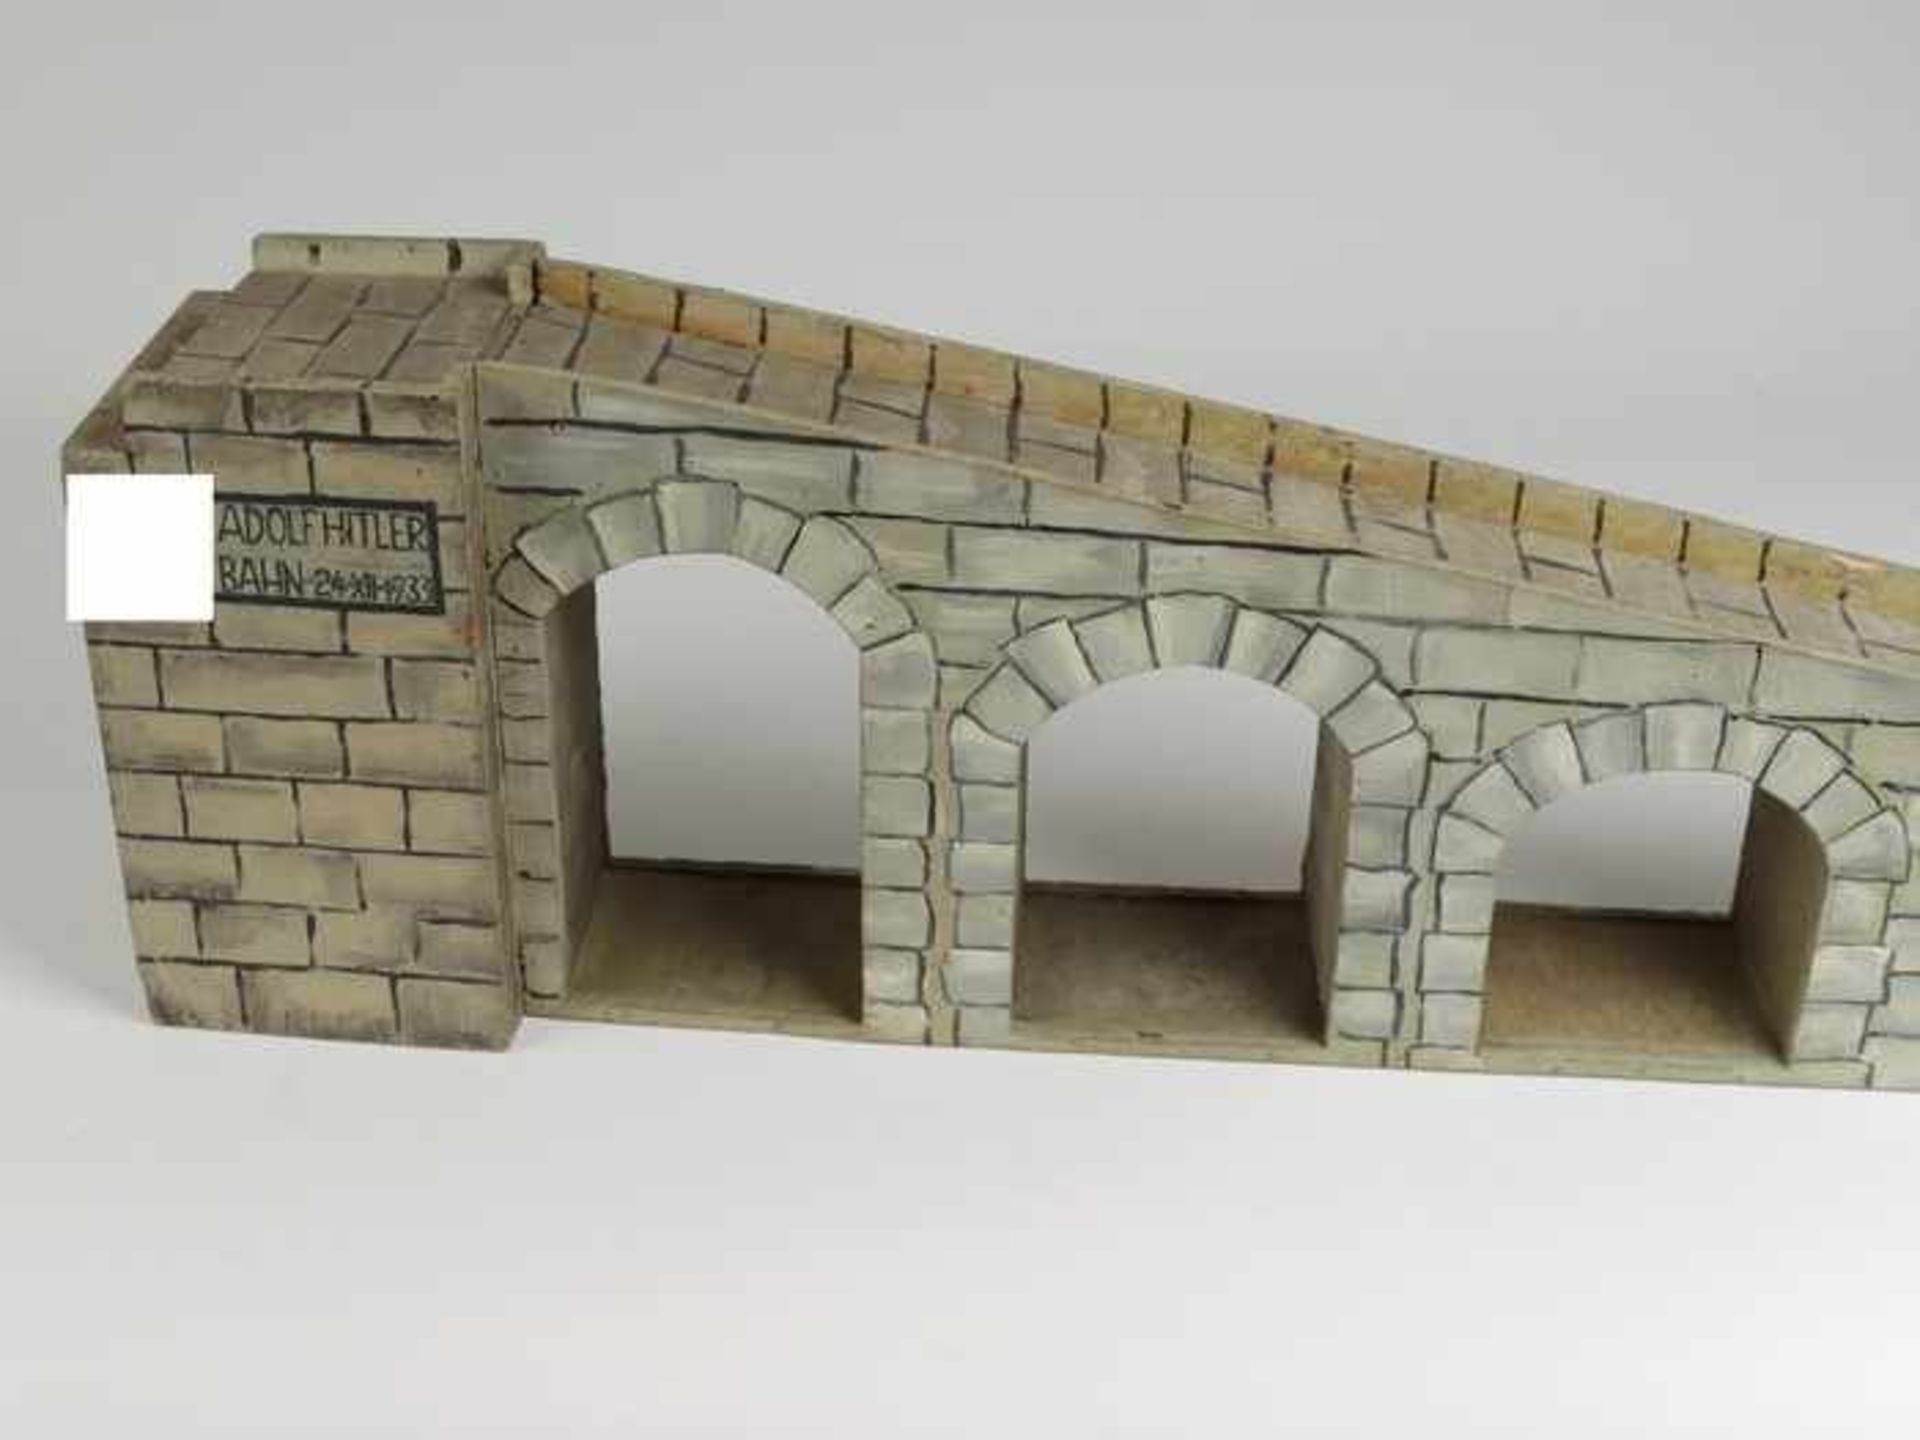 Eisenbahnbrückeum 1930, Holzmodell, bemalt, m. drei Torbogen, setil bez. "A.H. Bahn 24. XI 1933" - Bild 2 aus 2